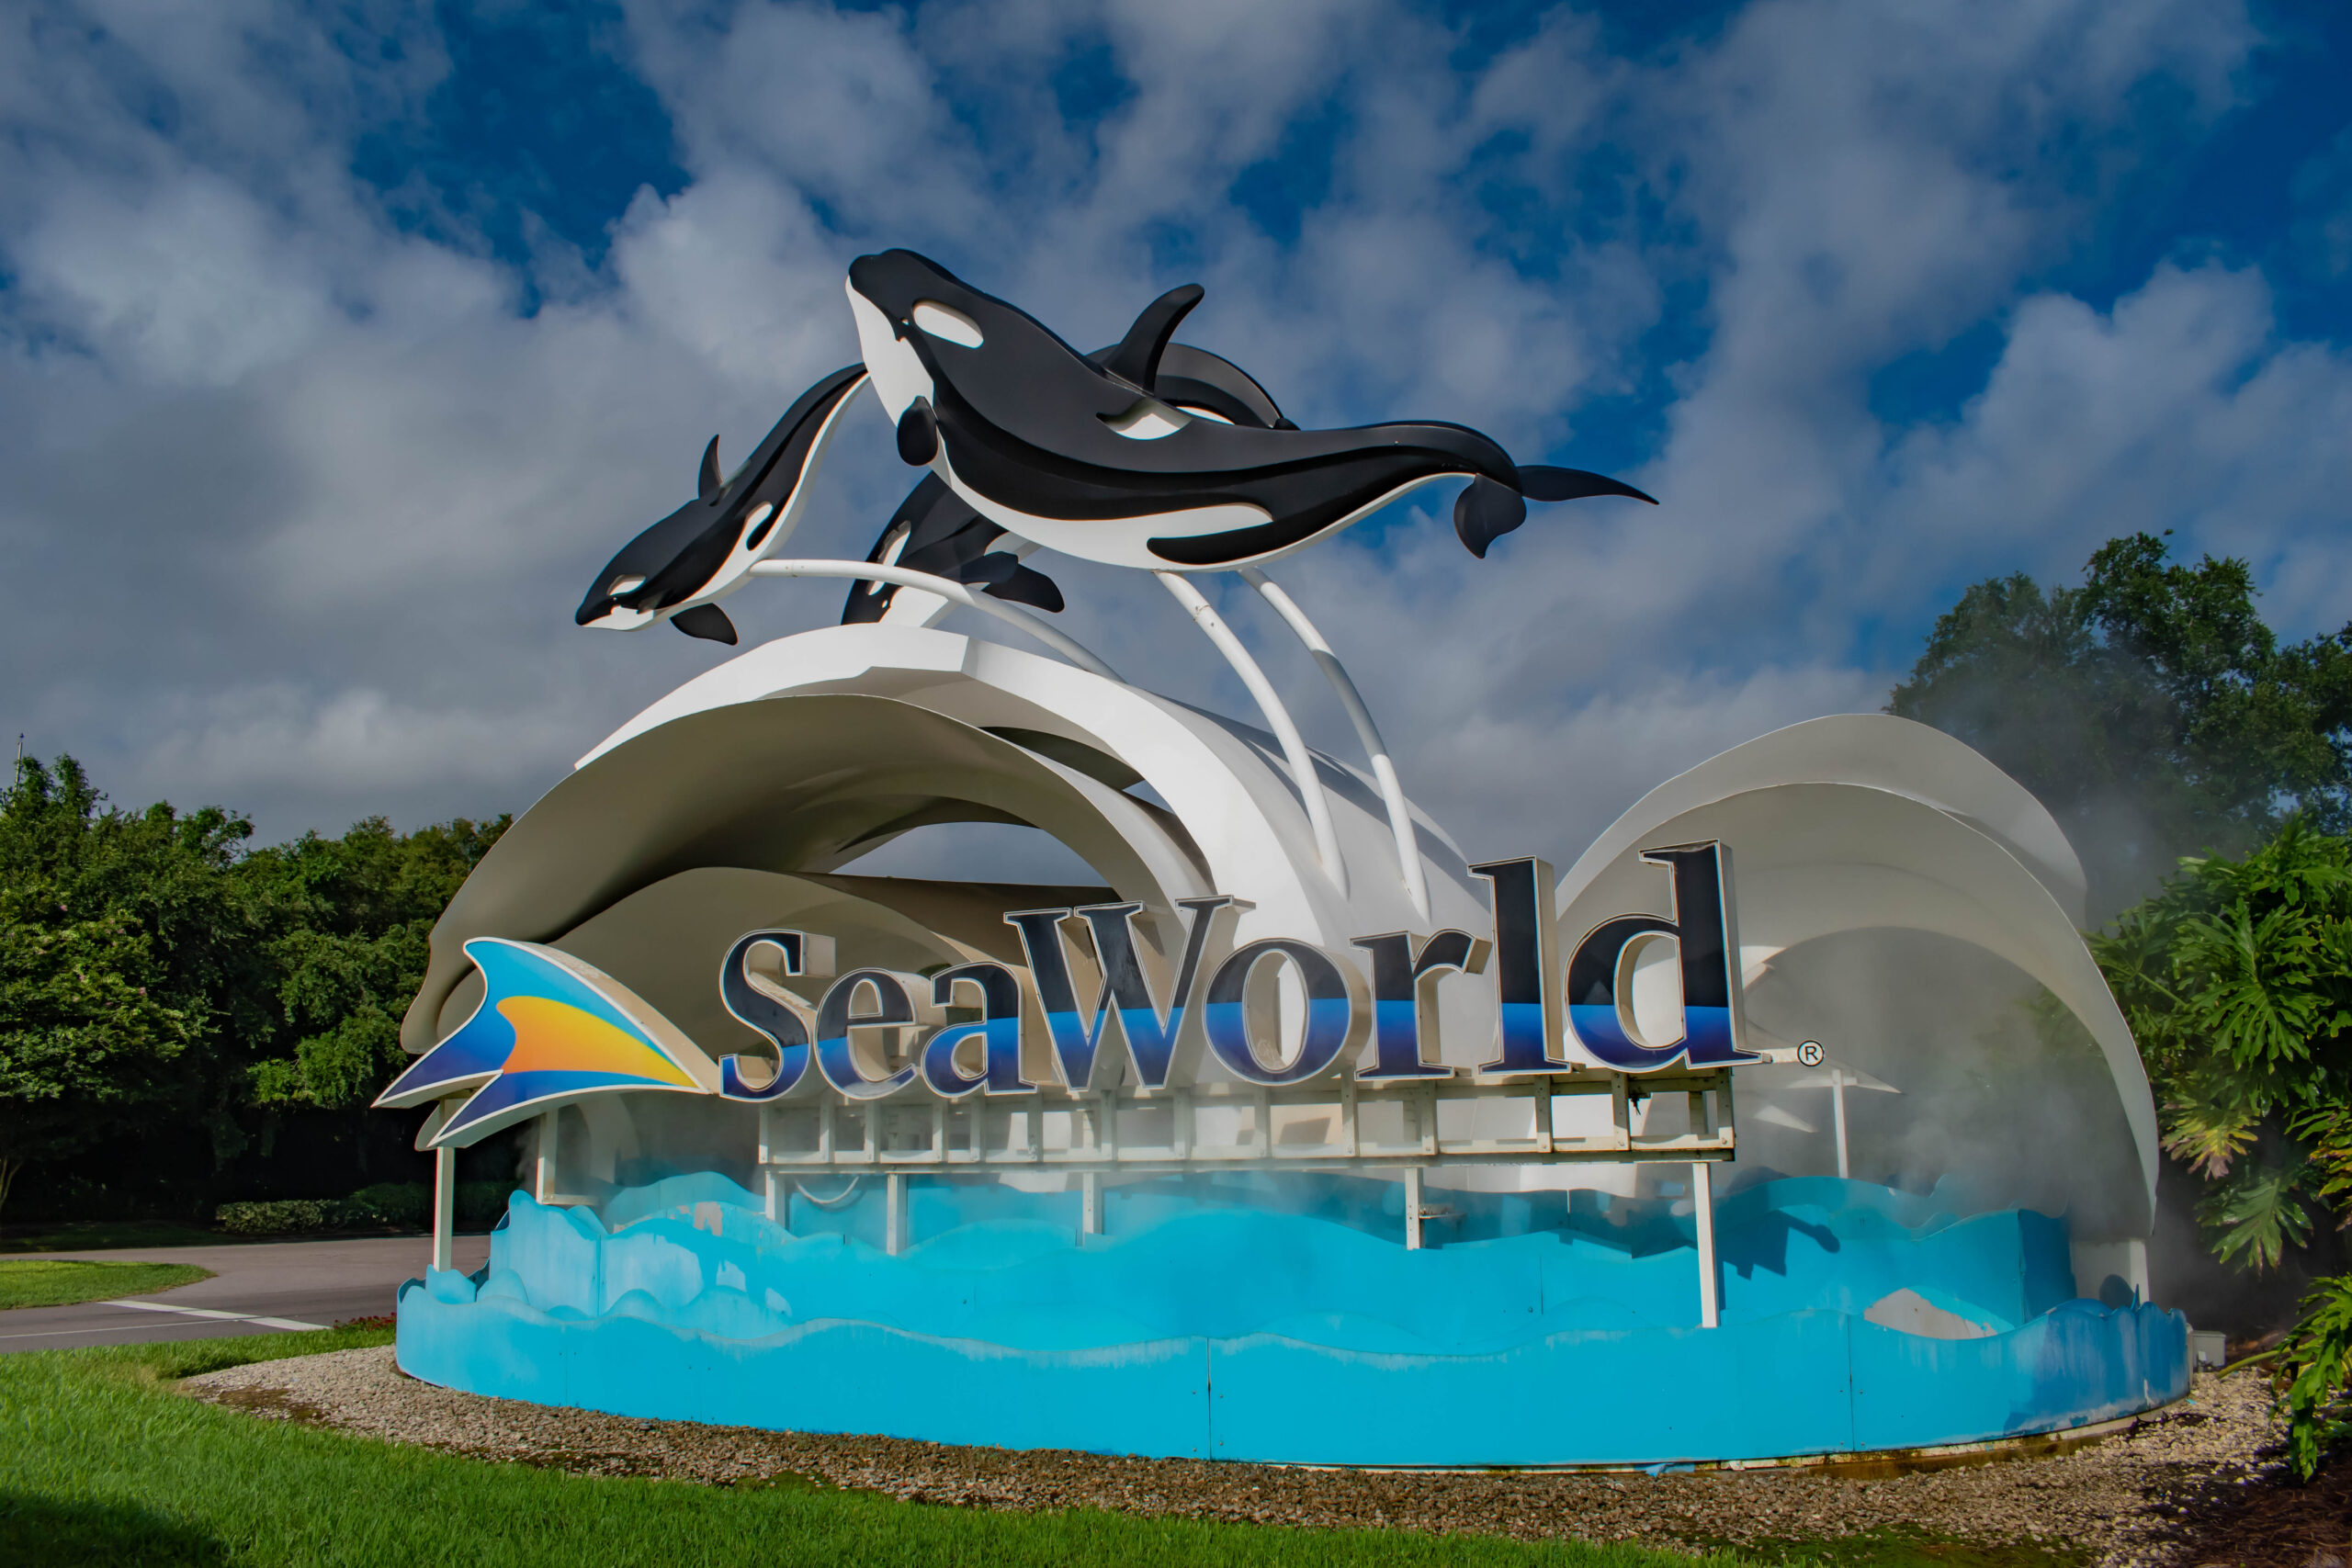 Orlando, Florida. June 17, 2019. Seaworld sign in International Drive area. 2